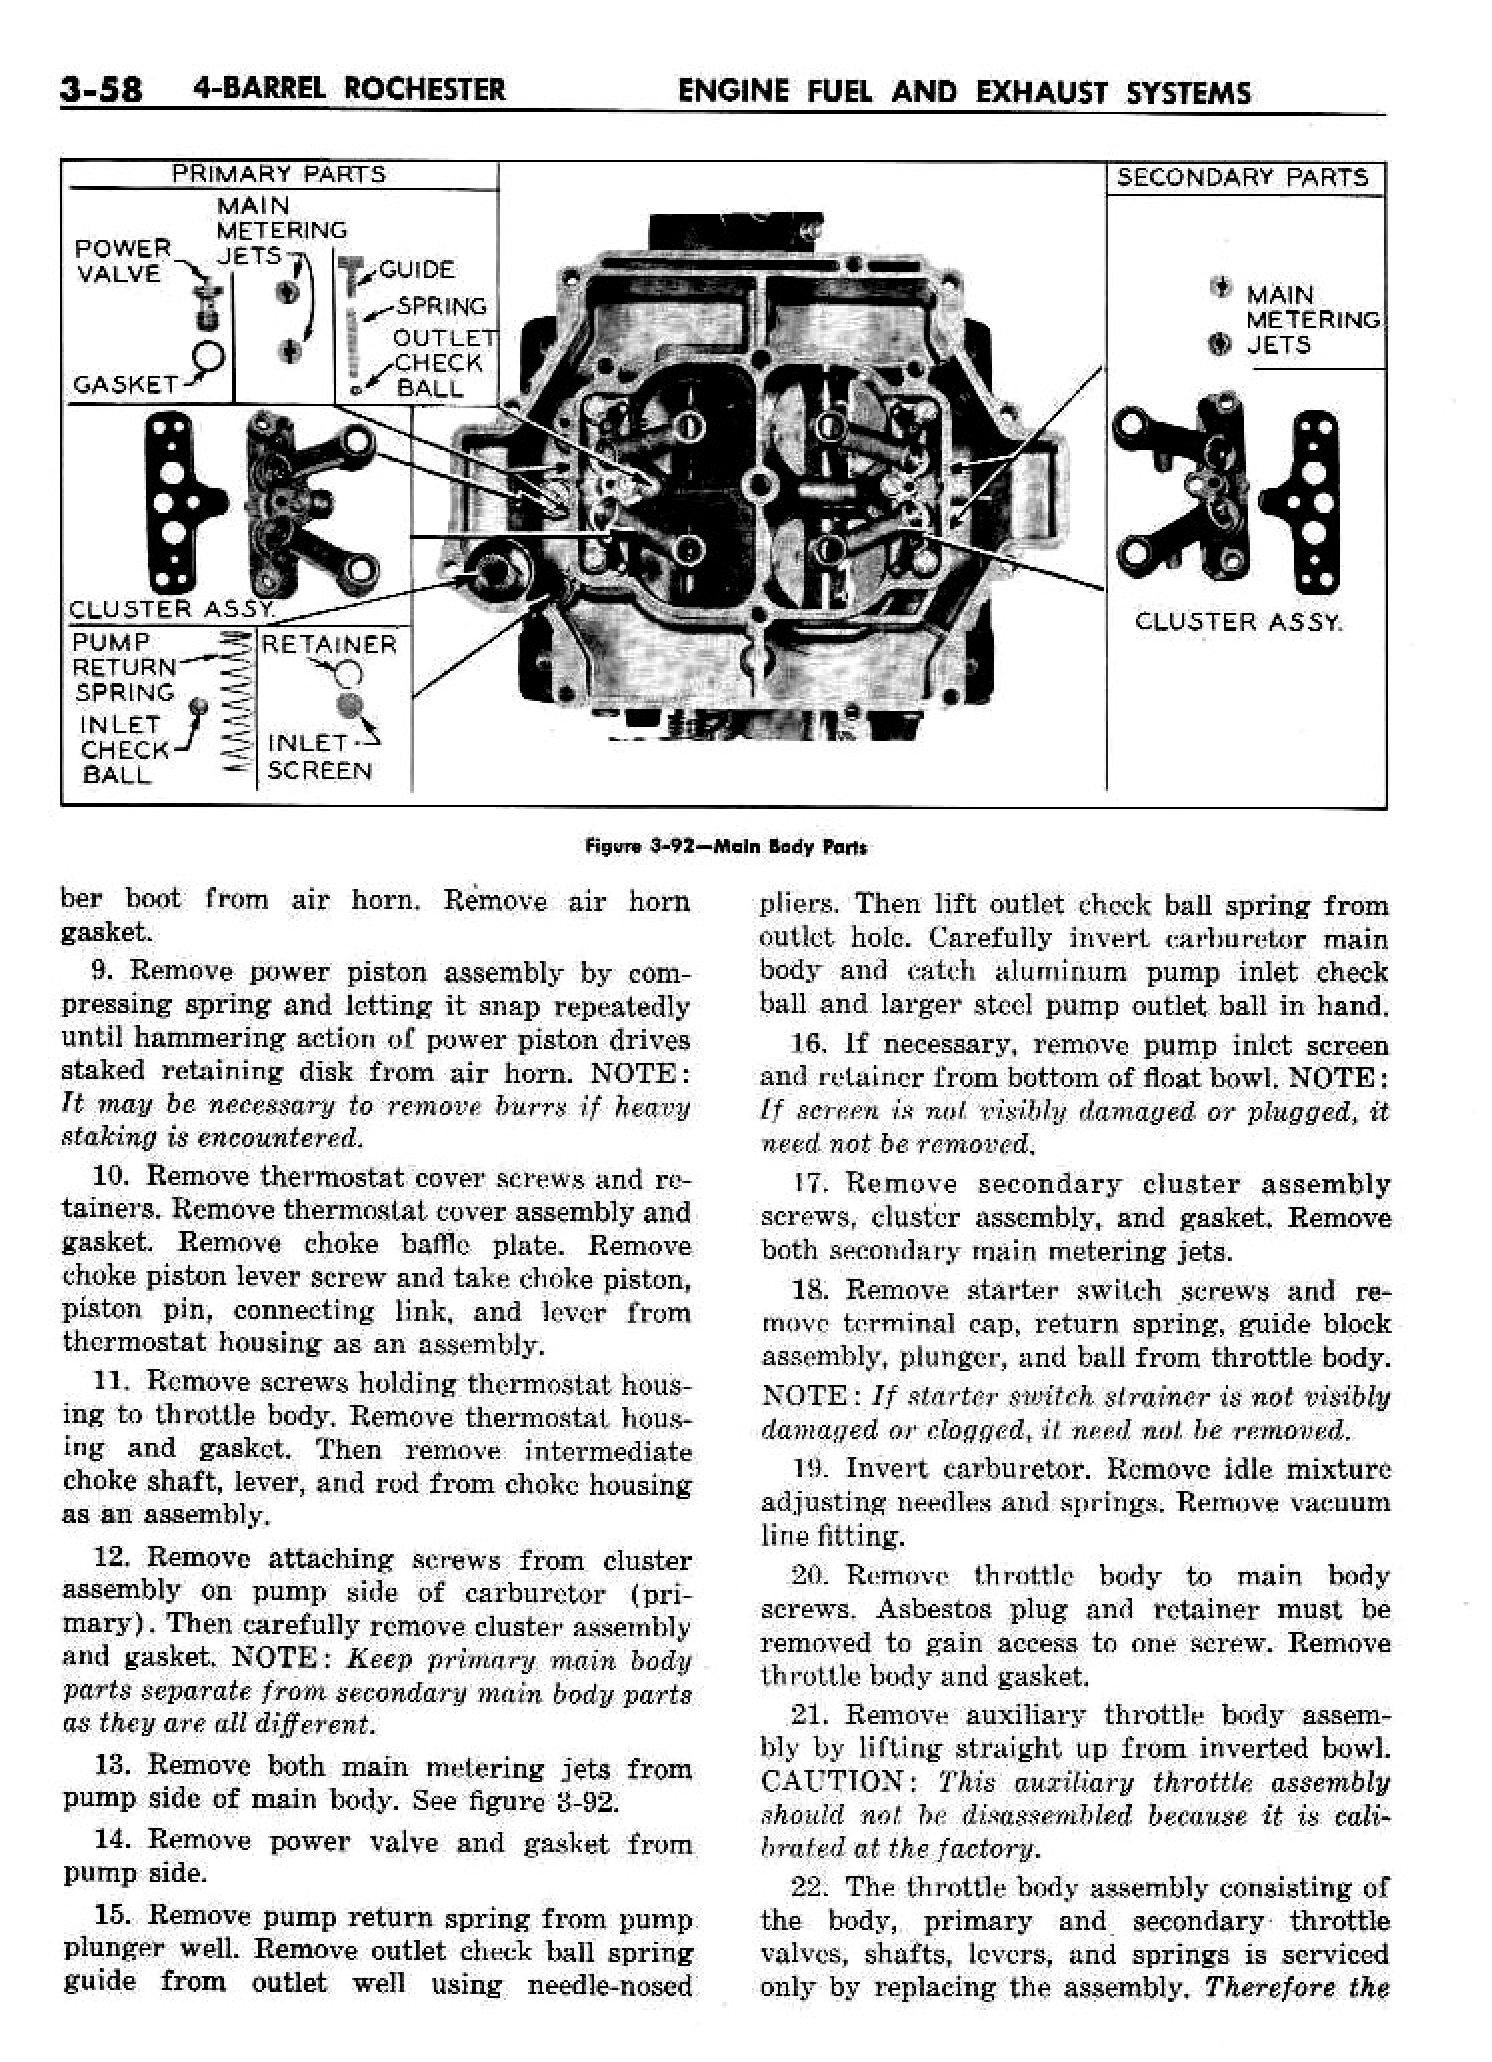 n_04 1958 Buick Shop Manual - Engine Fuel & Exhaust_58.jpg